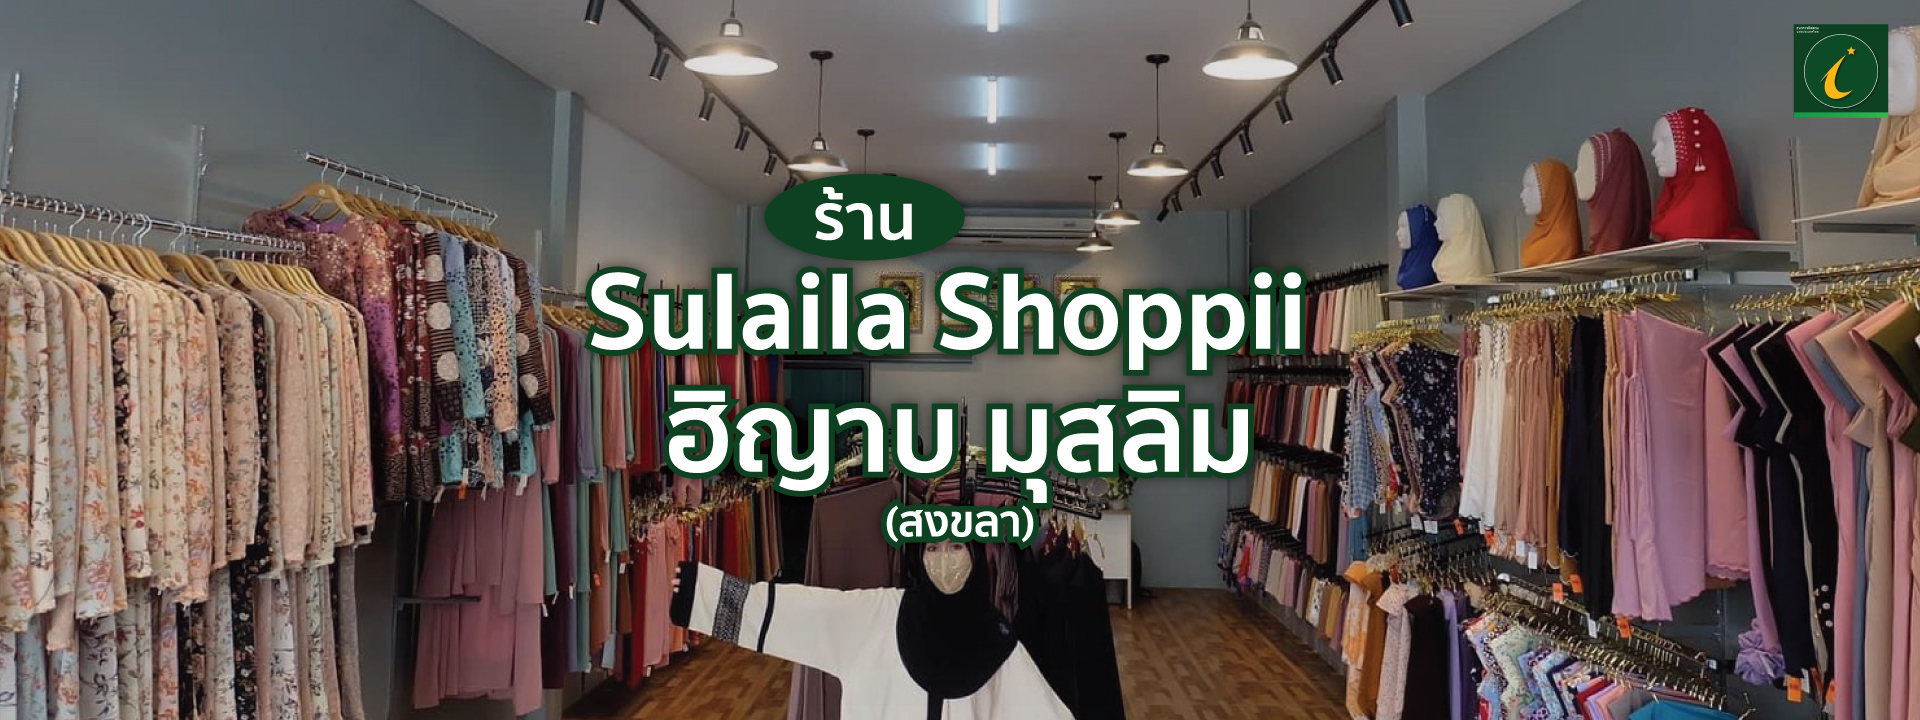 Sulaila Shoppii ฮิญาบ มุสลิม